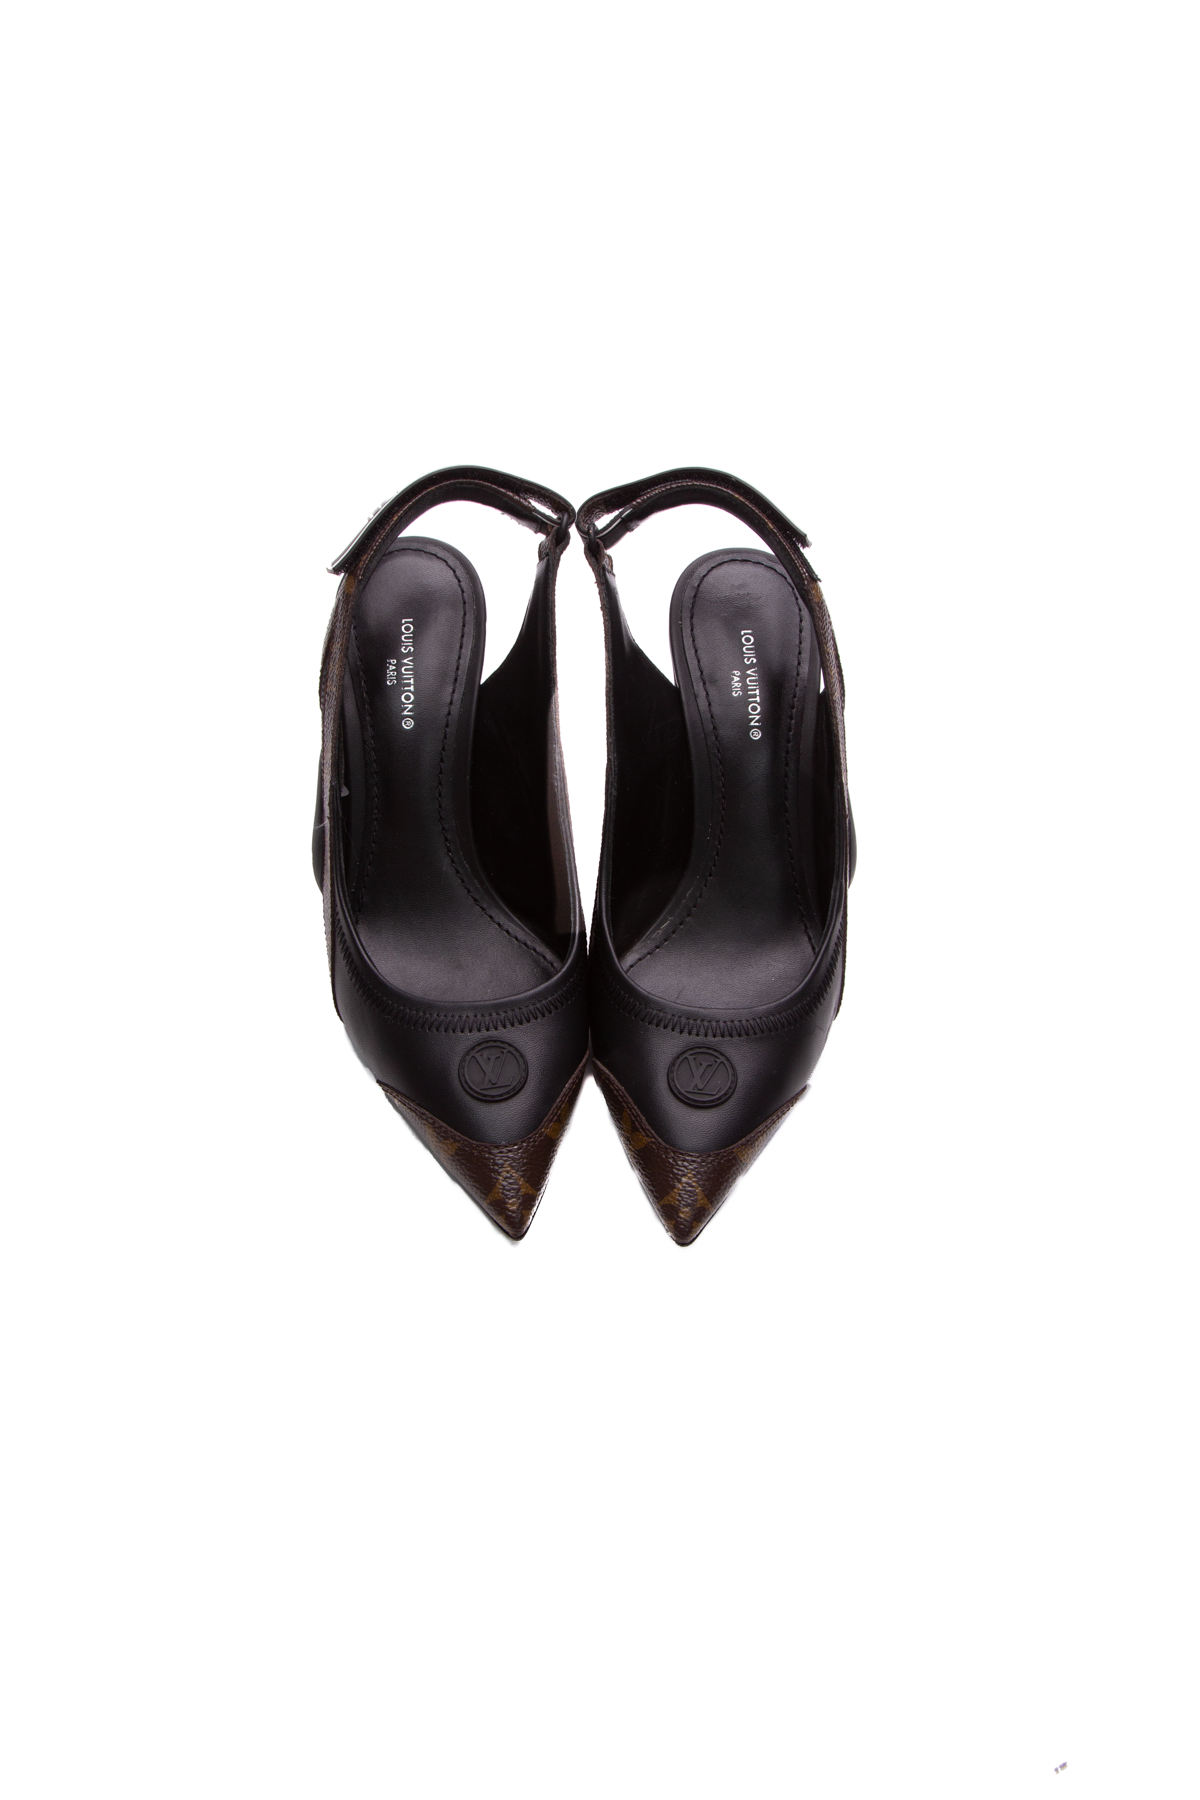 Louis Vuitton Archlight Slingback Heels - Size 35